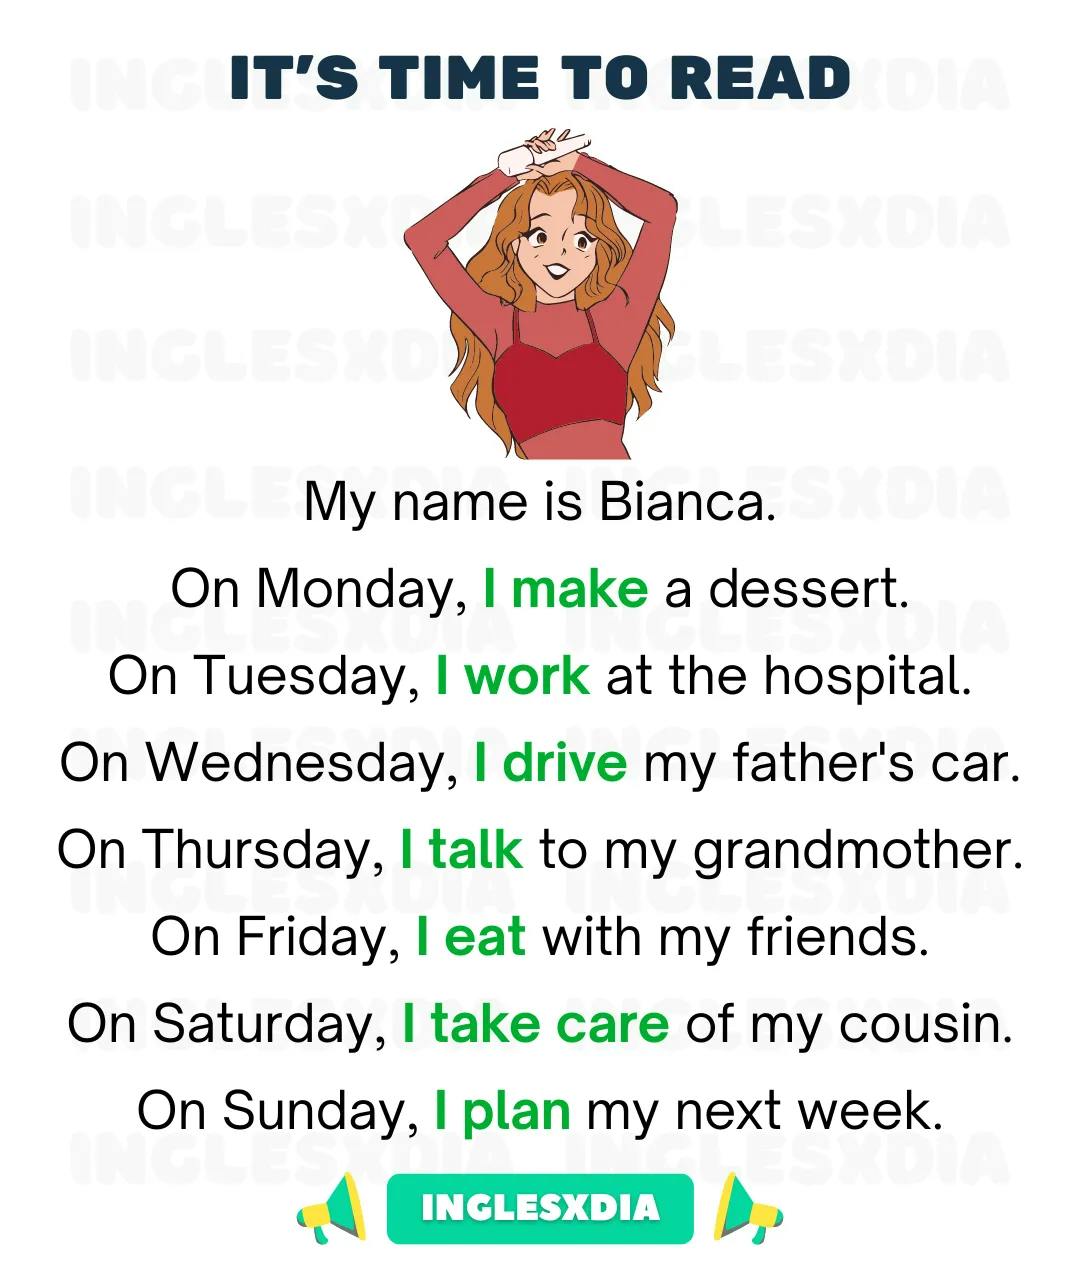 Bianca's routine